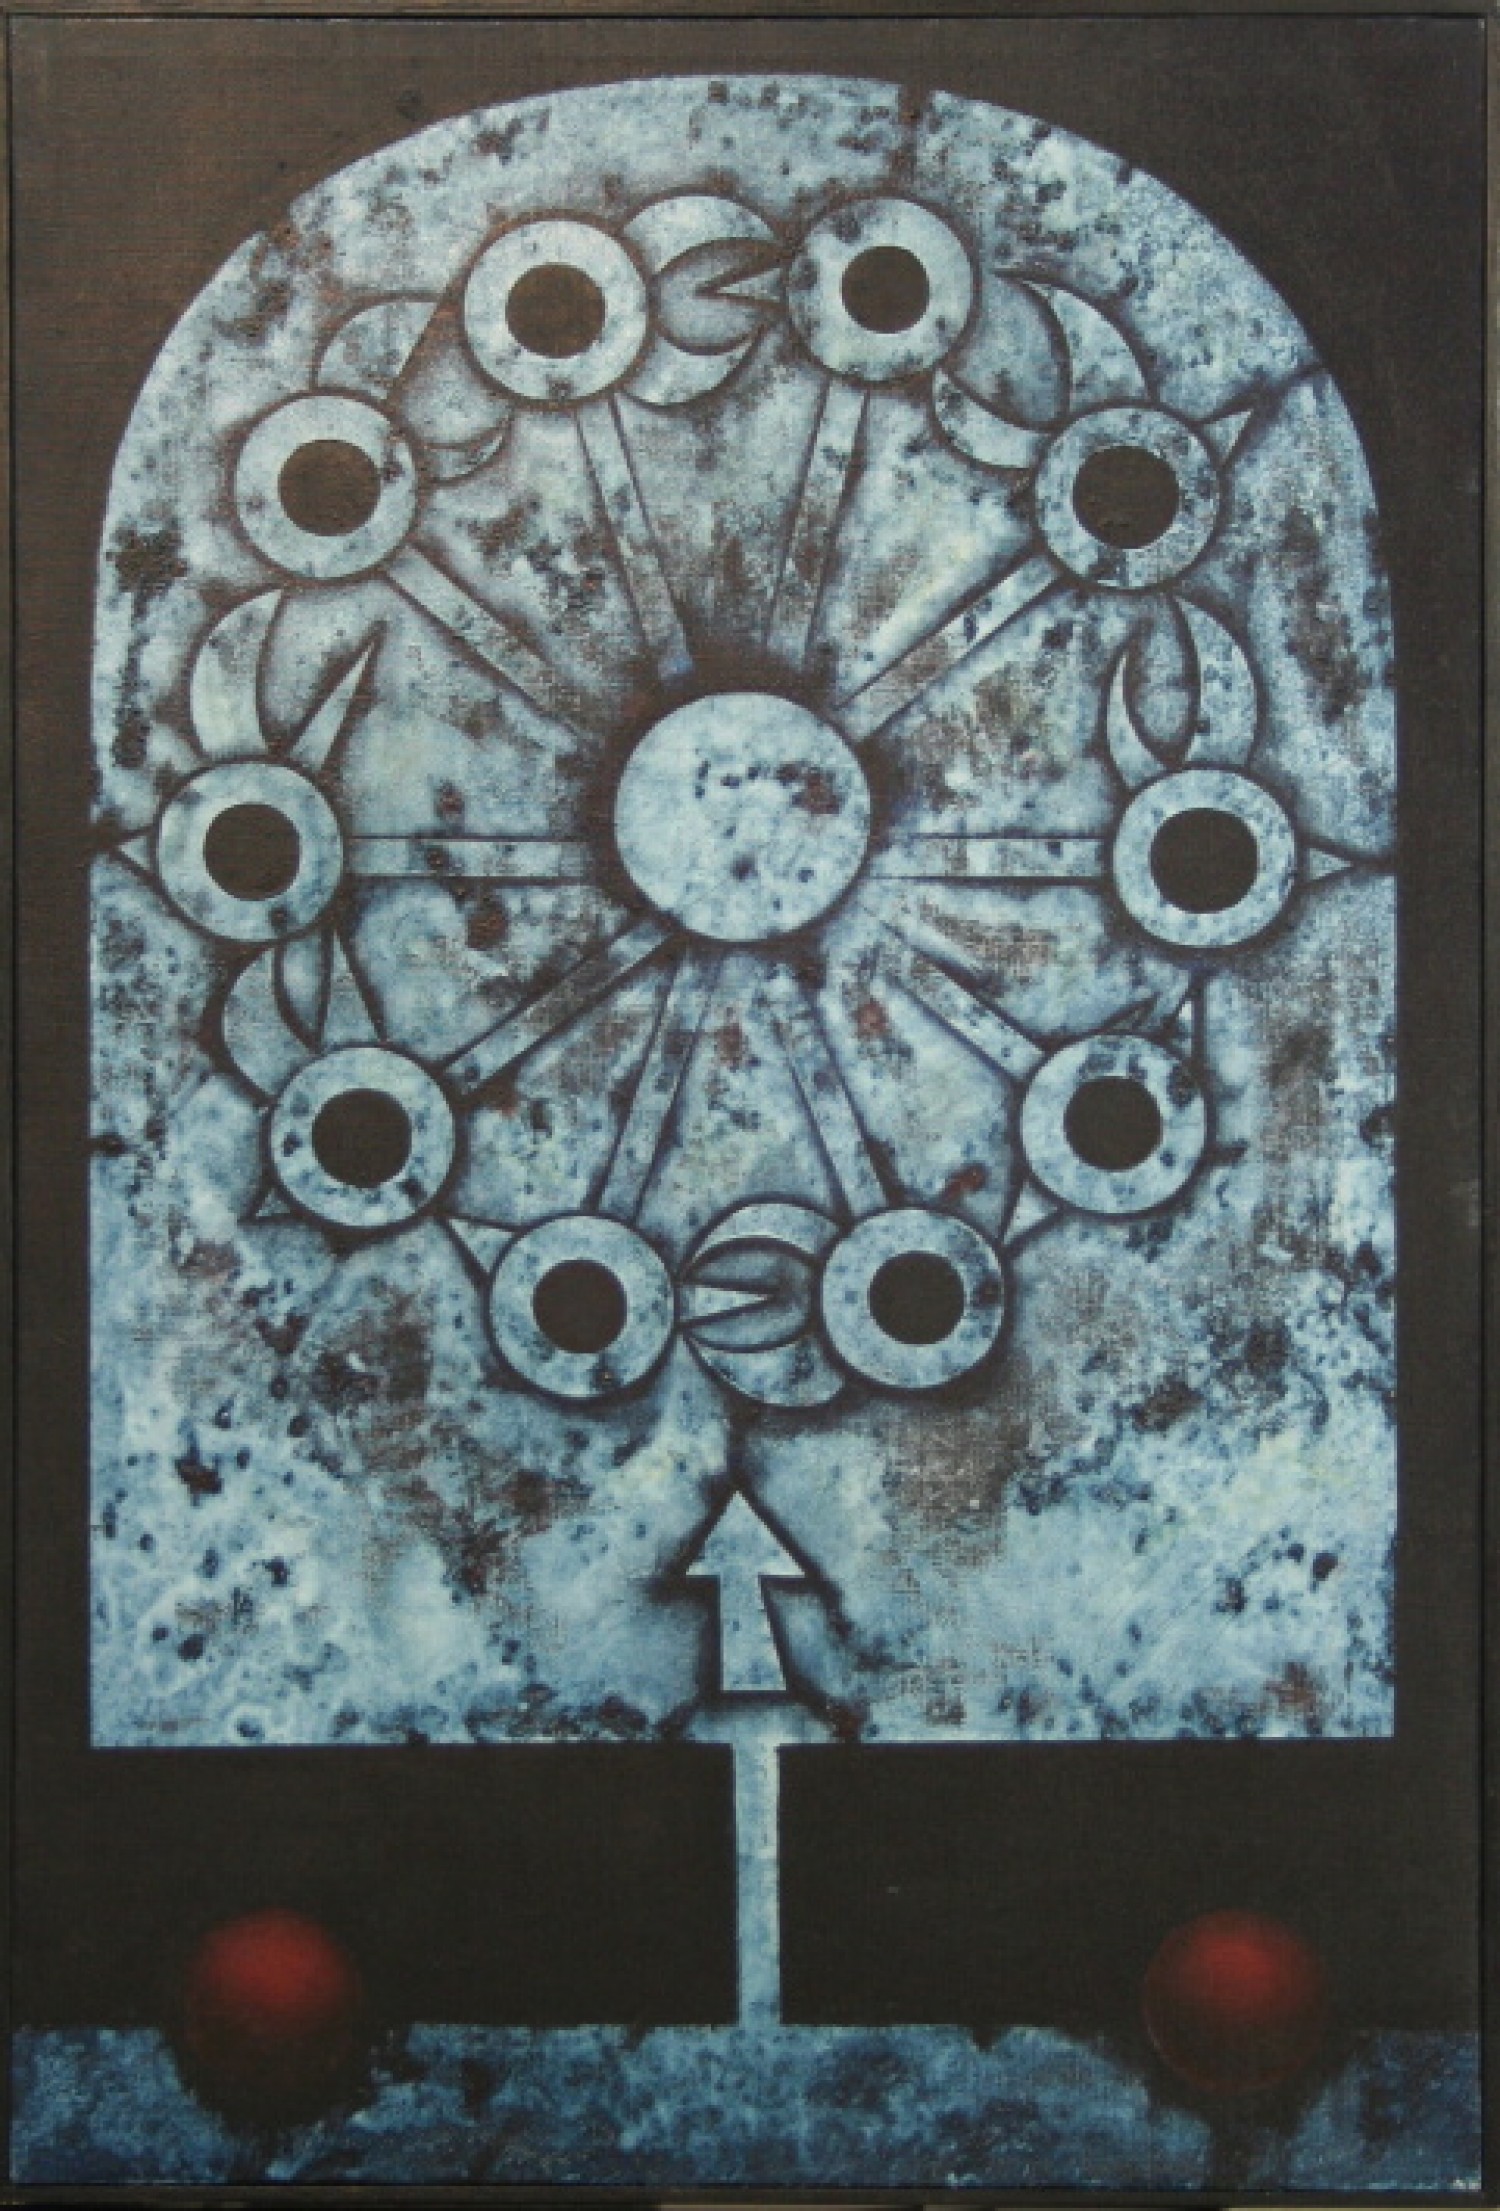 Mikuláš Medek: Orloj zbloudilých ptáků, 1968  60 x 40 cm, olej na plátně Galerie Dolmen, 19. 4. 2012 nevydraženo 